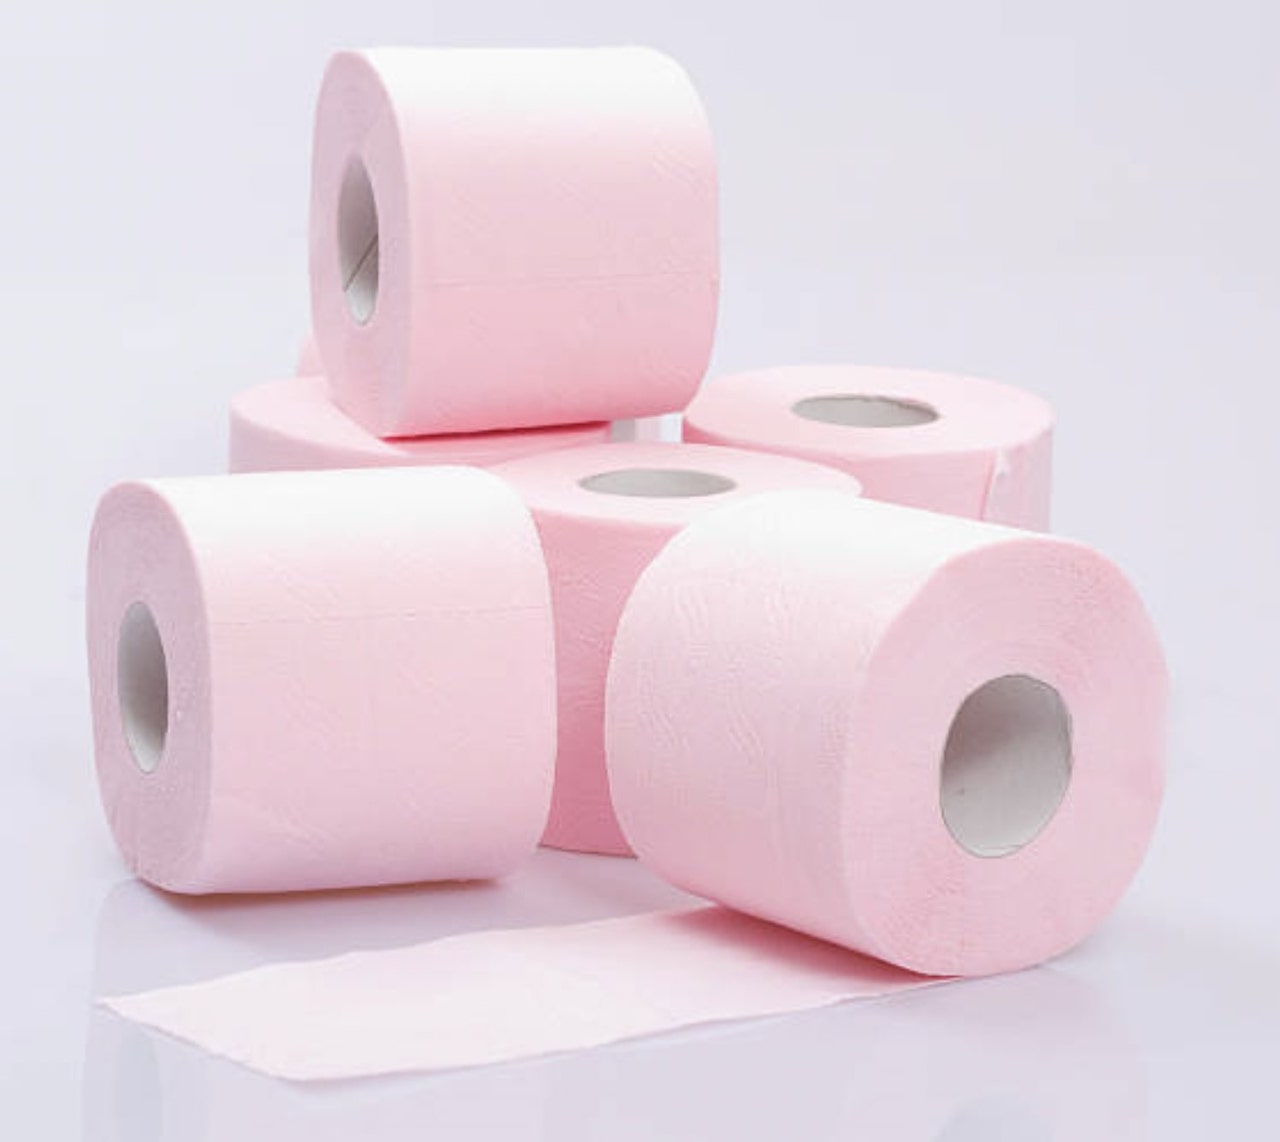 Розовая туалетная бумага. Ярко розовая туалетная бумага. Розовая туалетная бумага во Франции. Туалетная бумага с розовыми облачками.